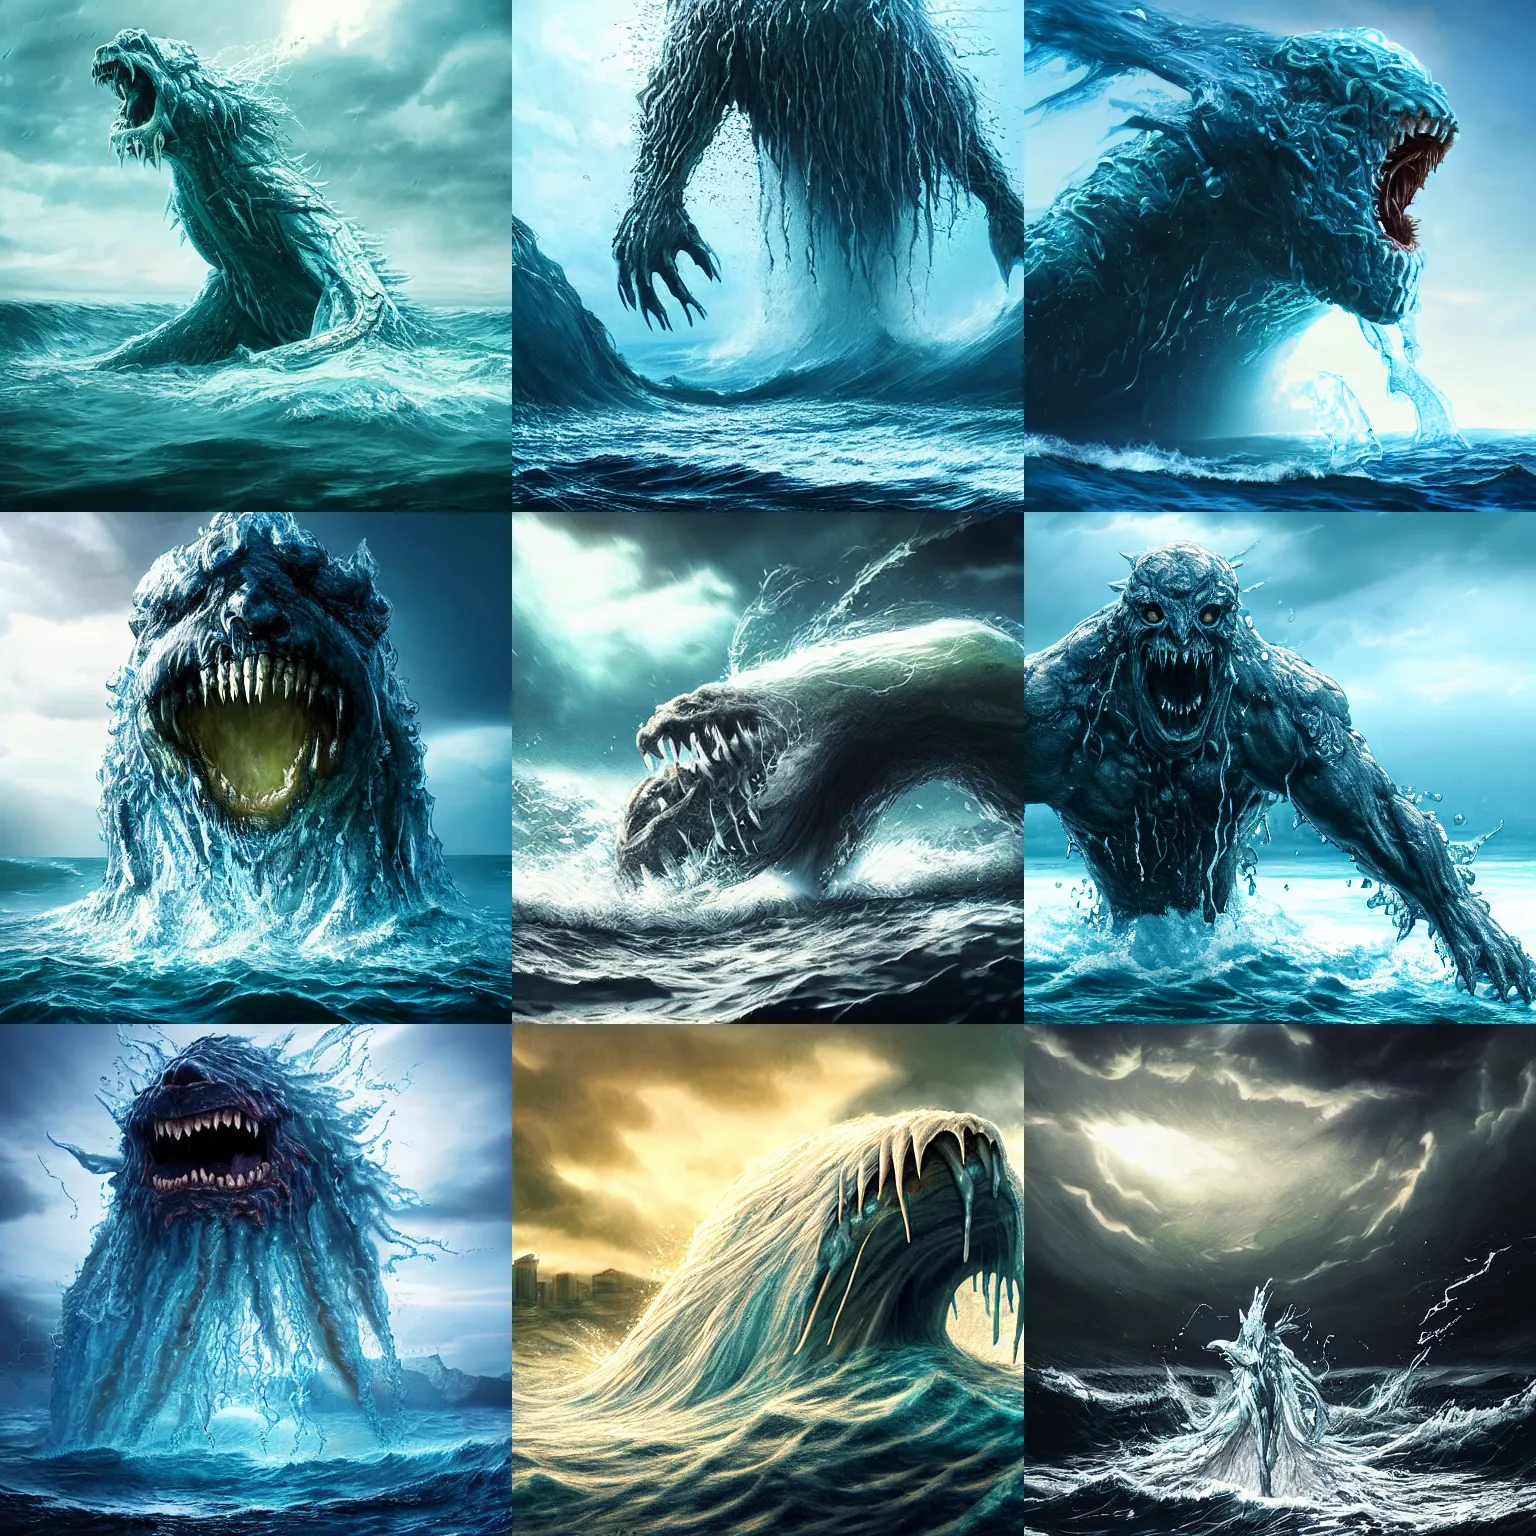 Prompt: monster made of water emerging from the ocean, epic, epic lighting, digital art, hyper realistic, establishing shot, artstation, frightening